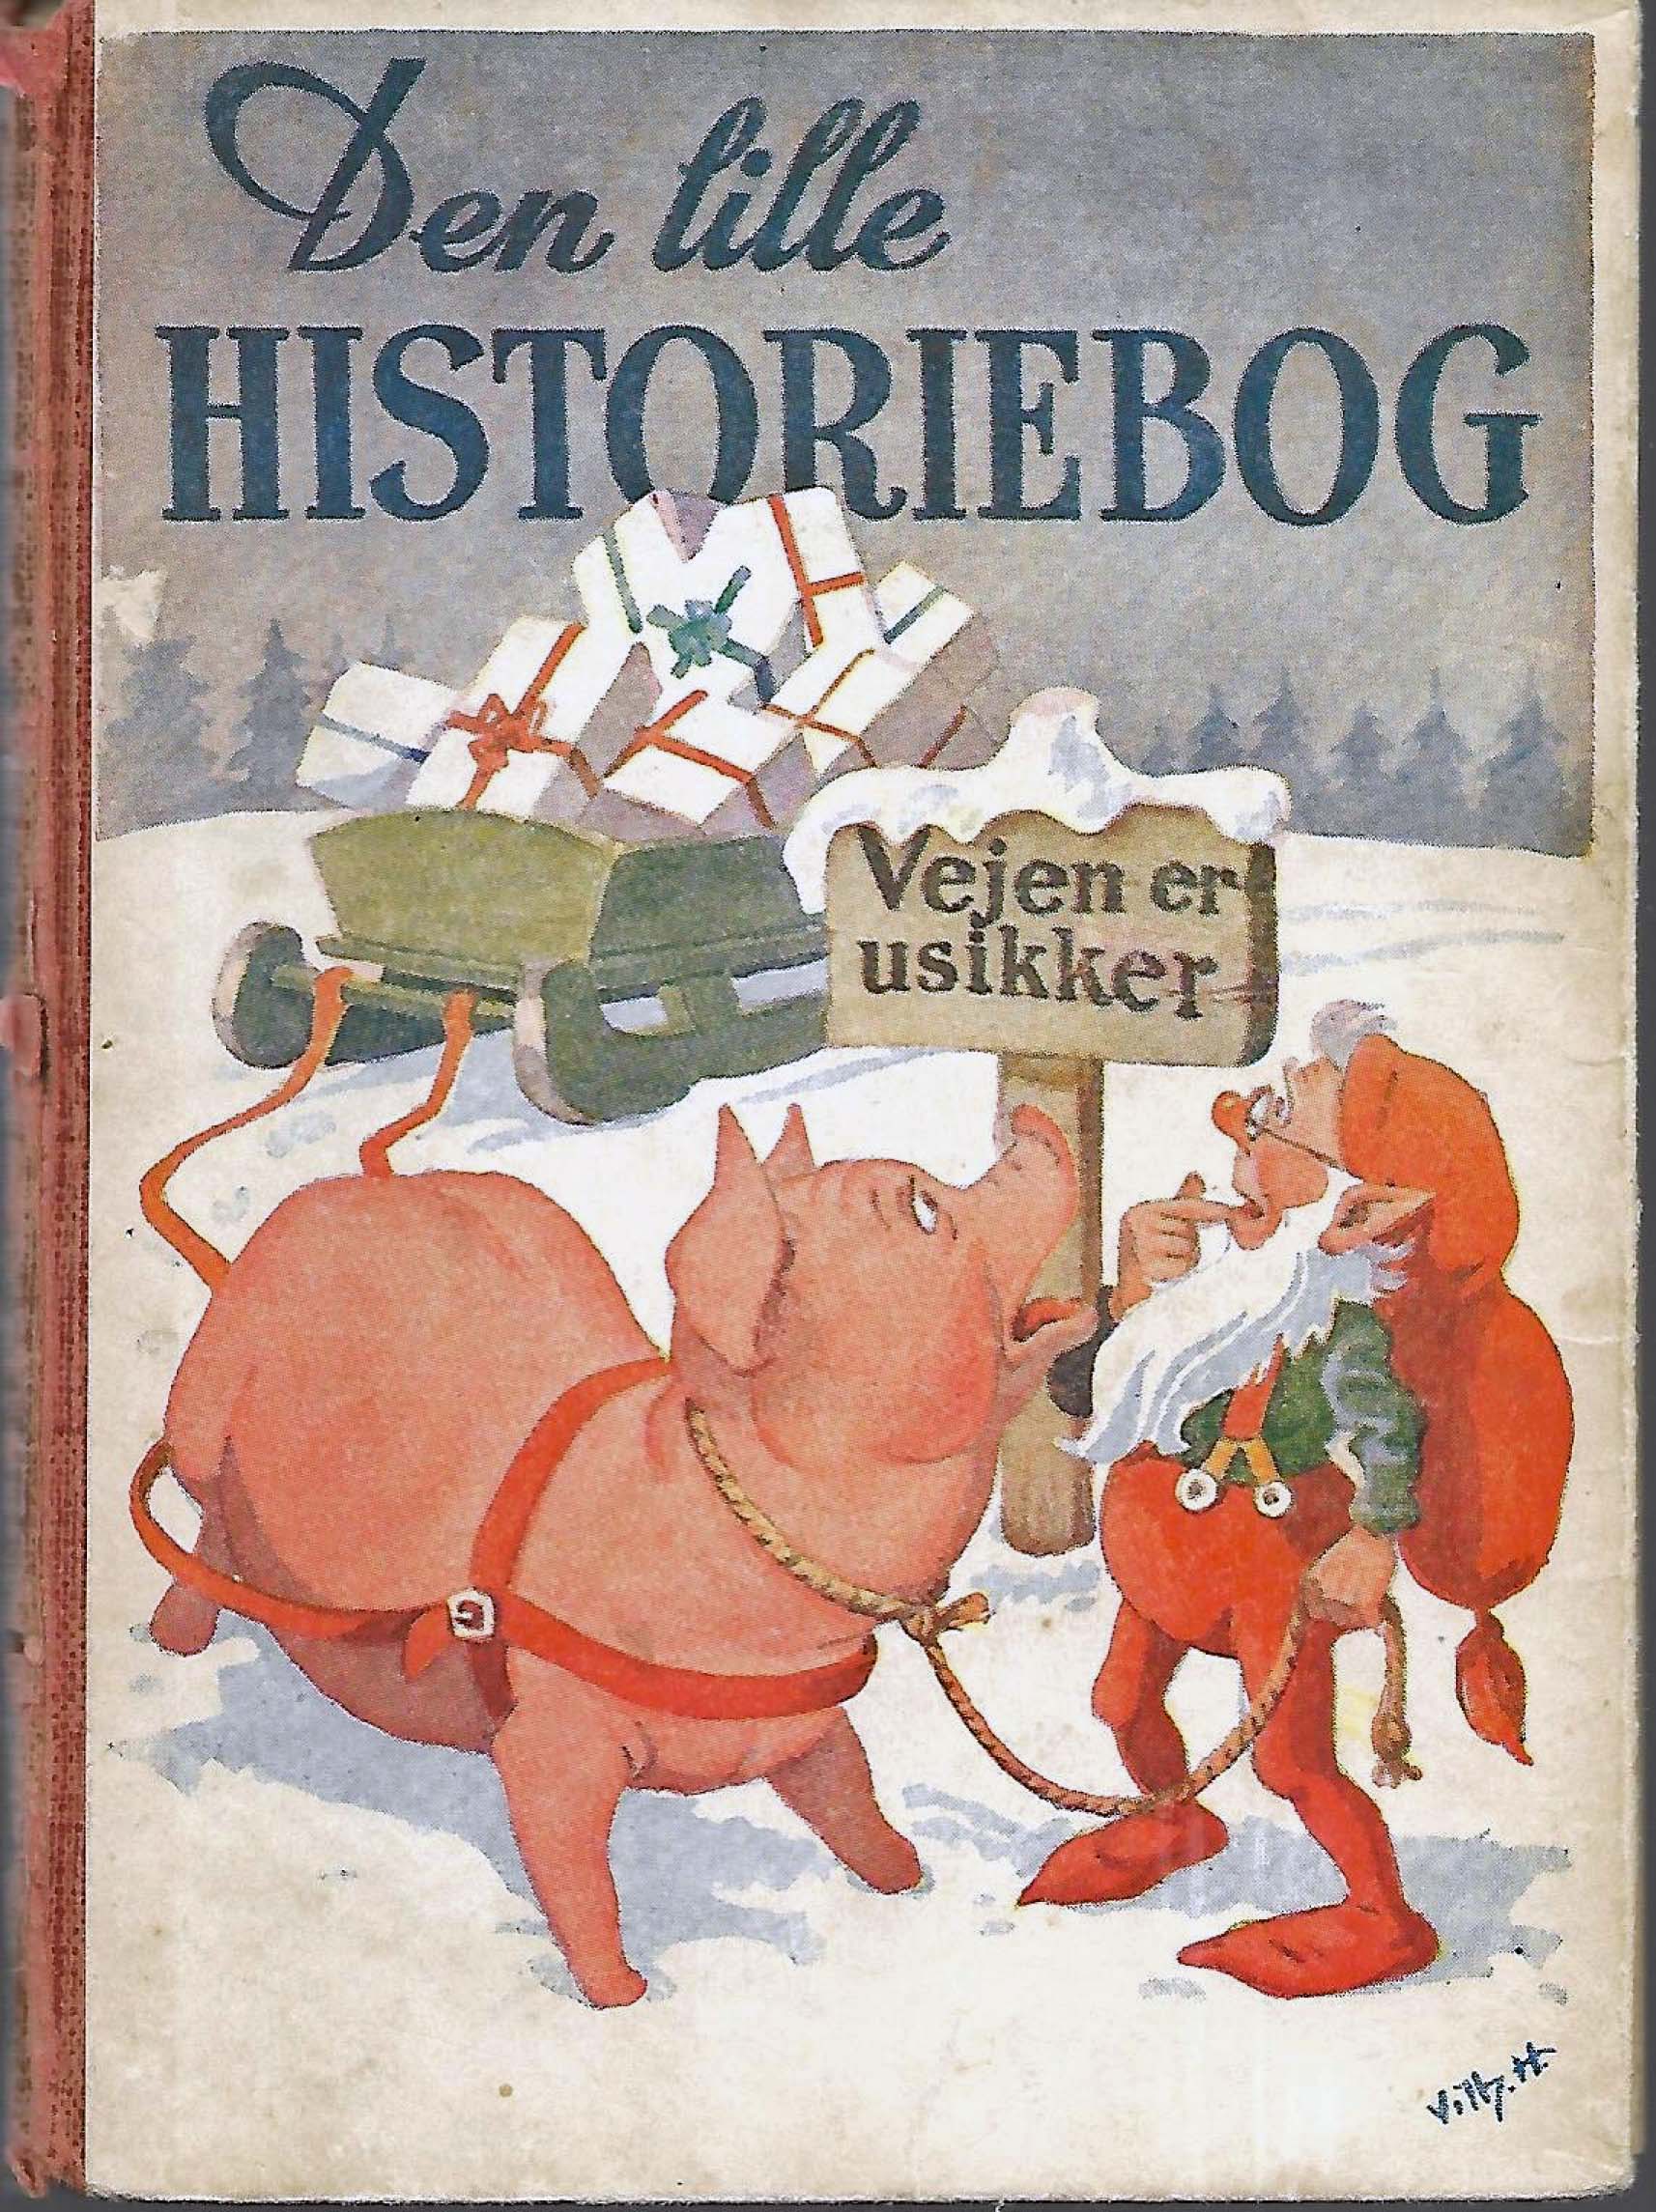 1951 Den lille Historiebog